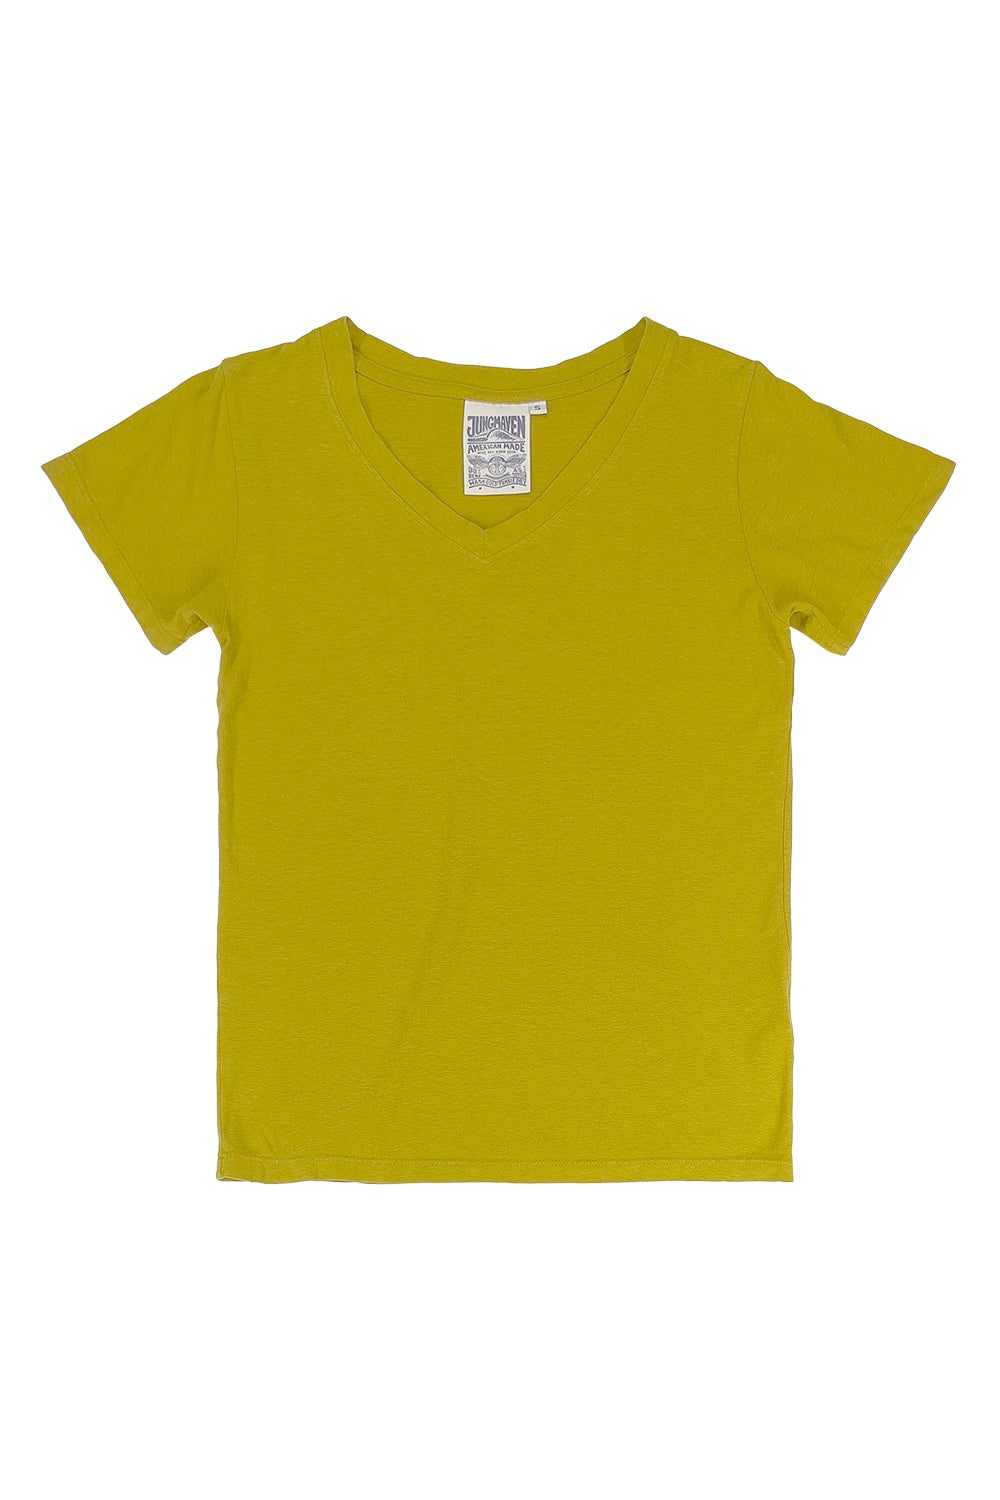 Paige V-neck | Jungmaven Hemp Clothing & Accessories / Color:Citrine Yellow